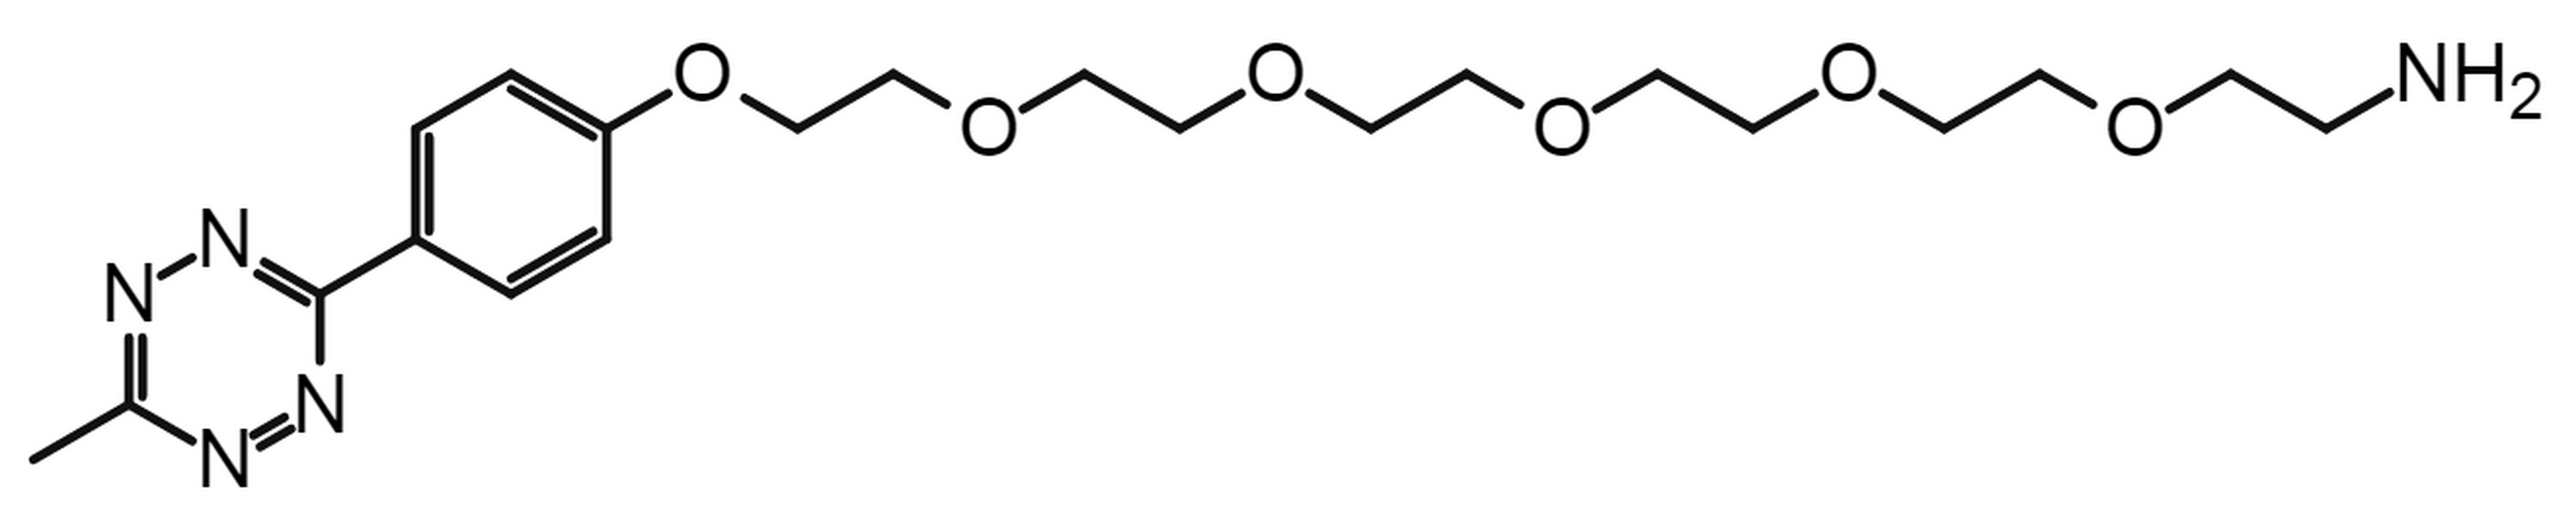 Methyltetrazine-PEG6-amine HCl salt